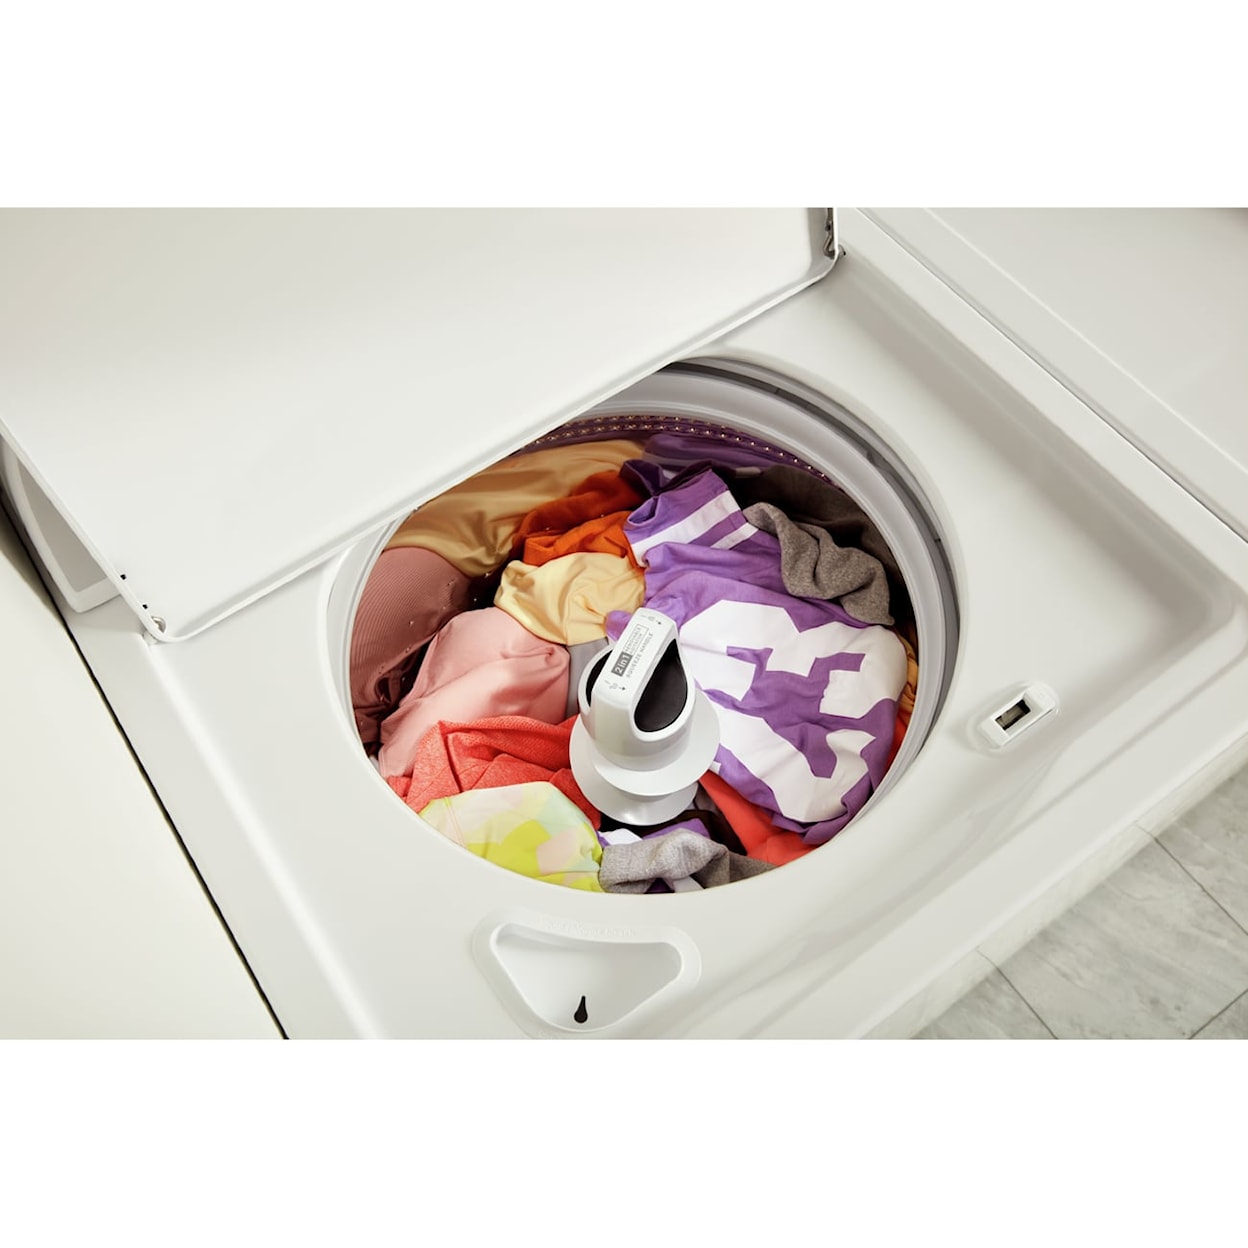 Whirlpool Laundry 3.8–3.9 Cu. Ft. Whirlpool Washer